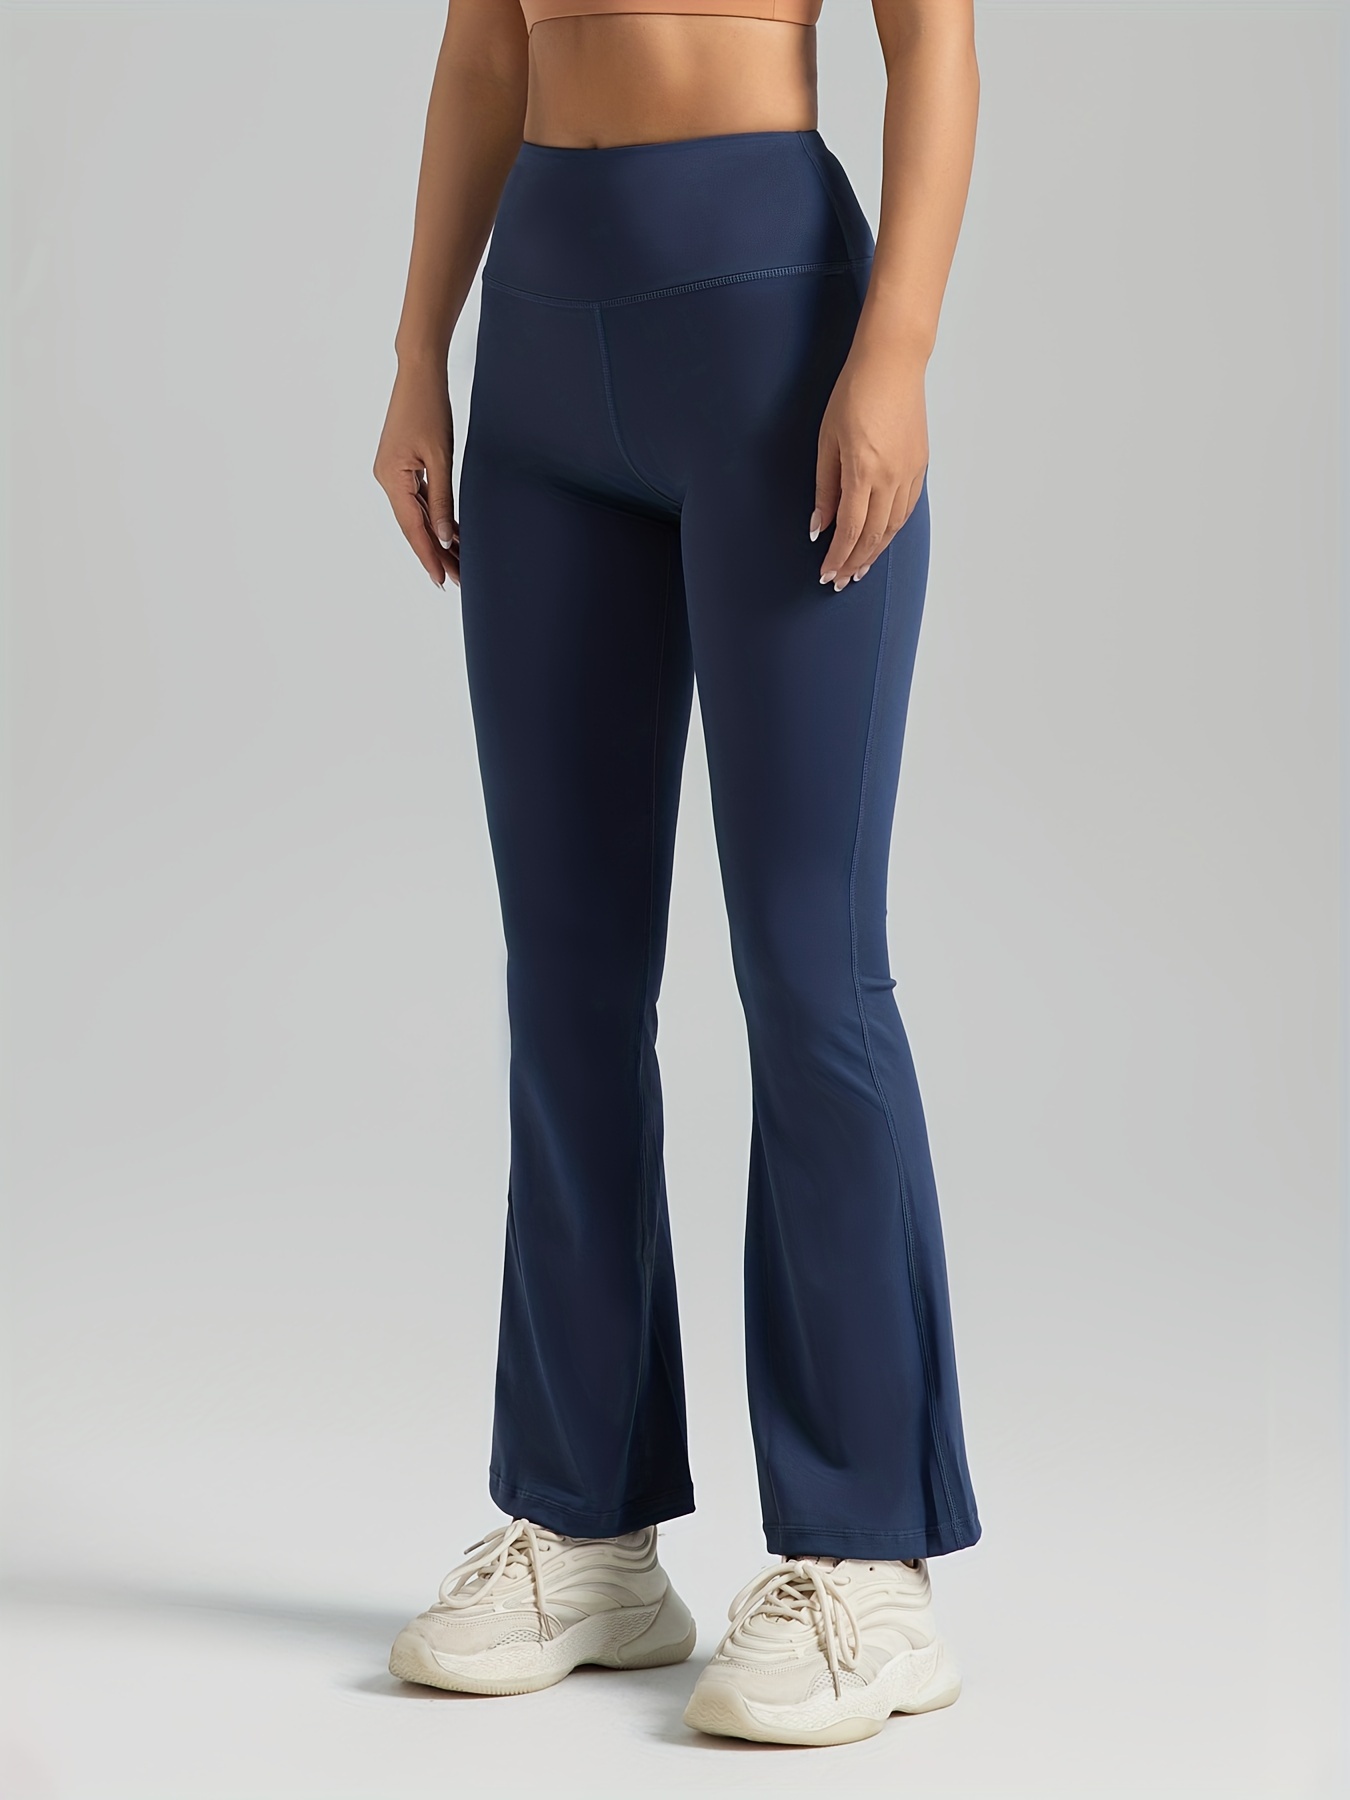 Lululemon True Navy Groove Pant (Size 4) - Athletic apparel